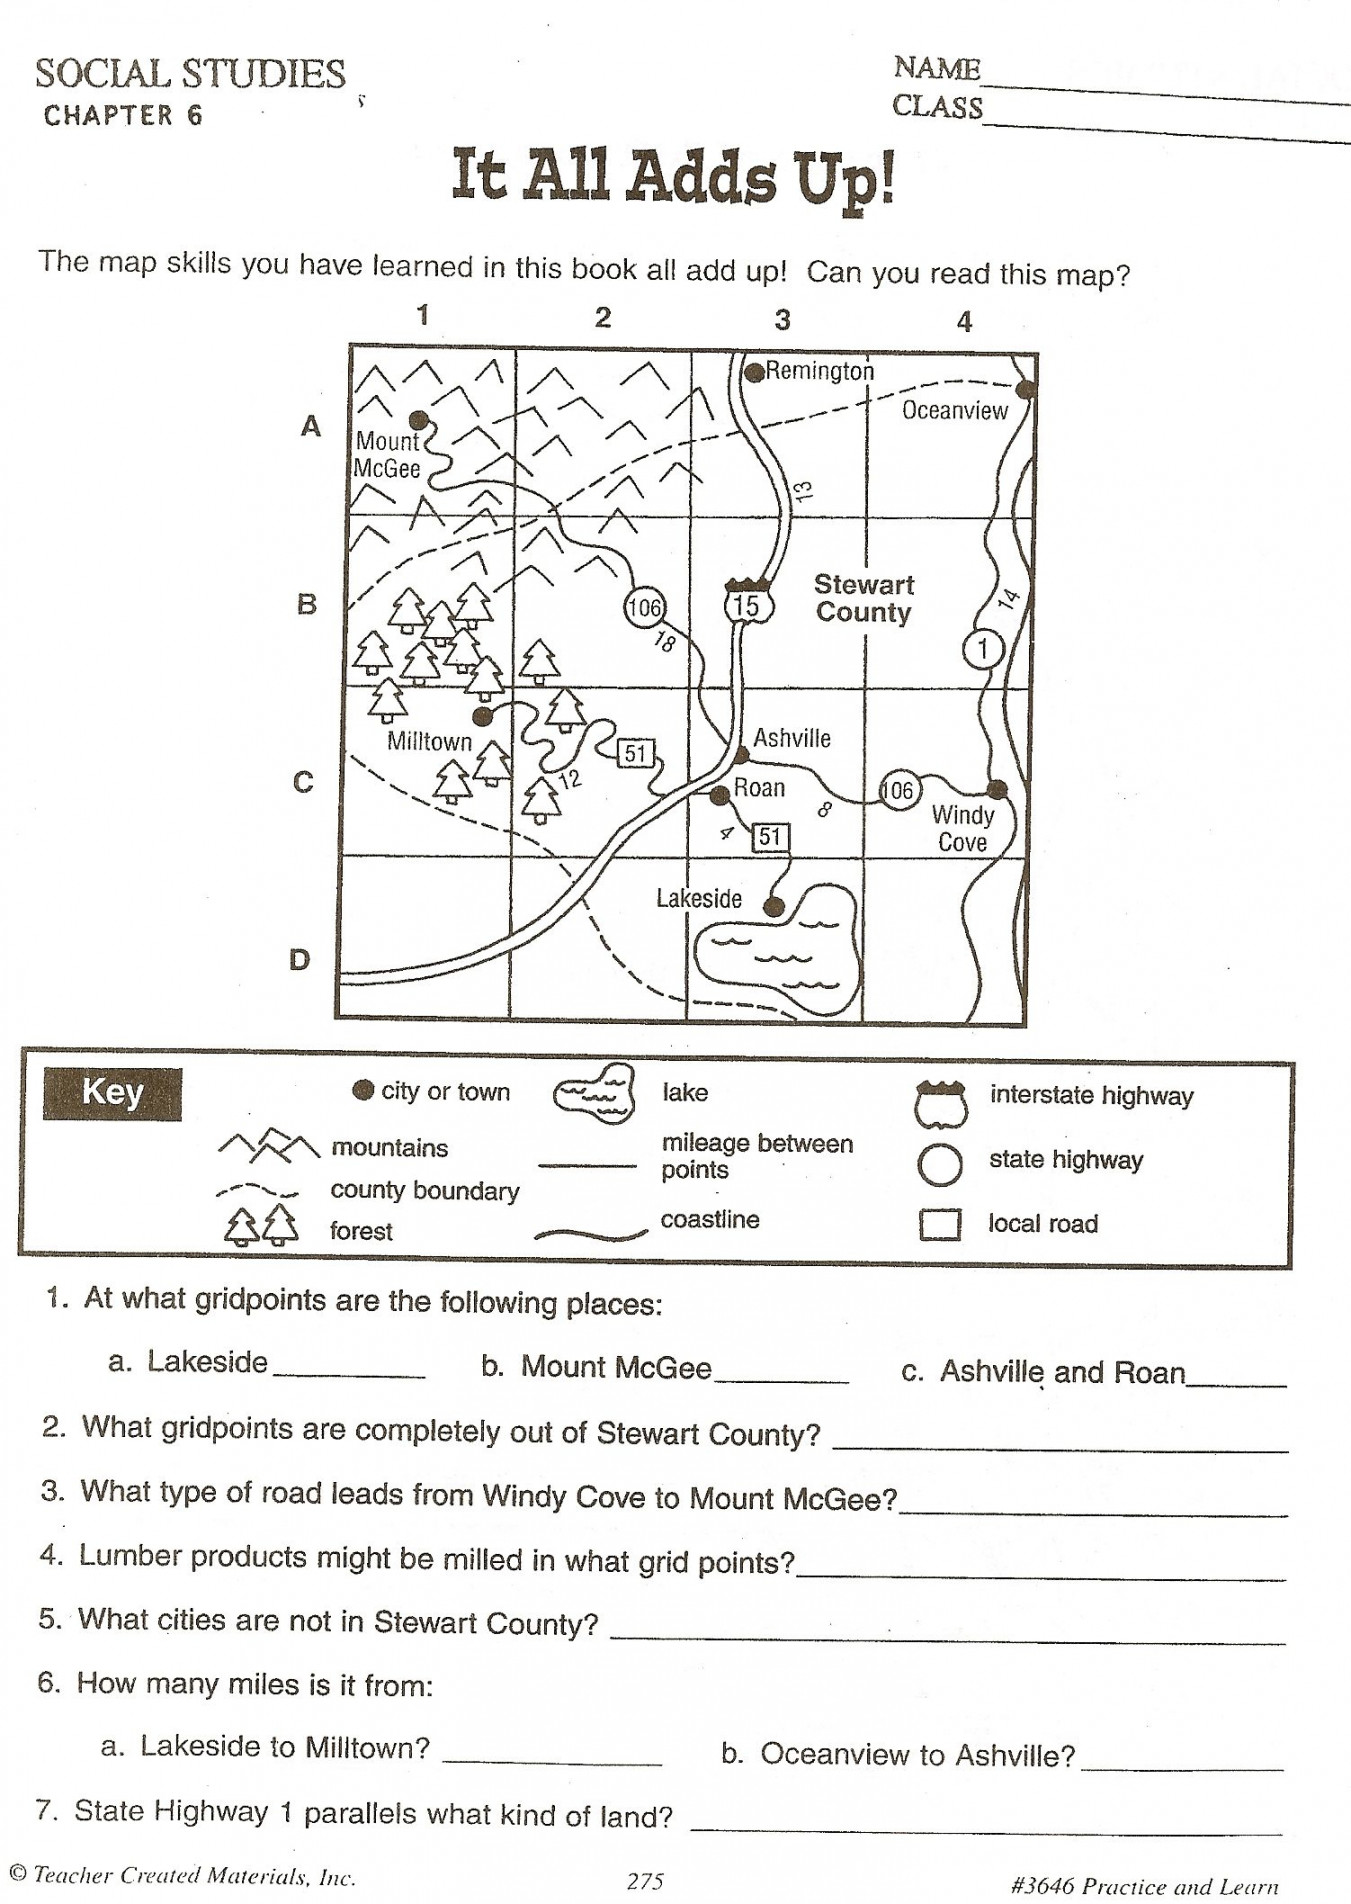 Map skills worksheets, Social studies worksheets, Map skills